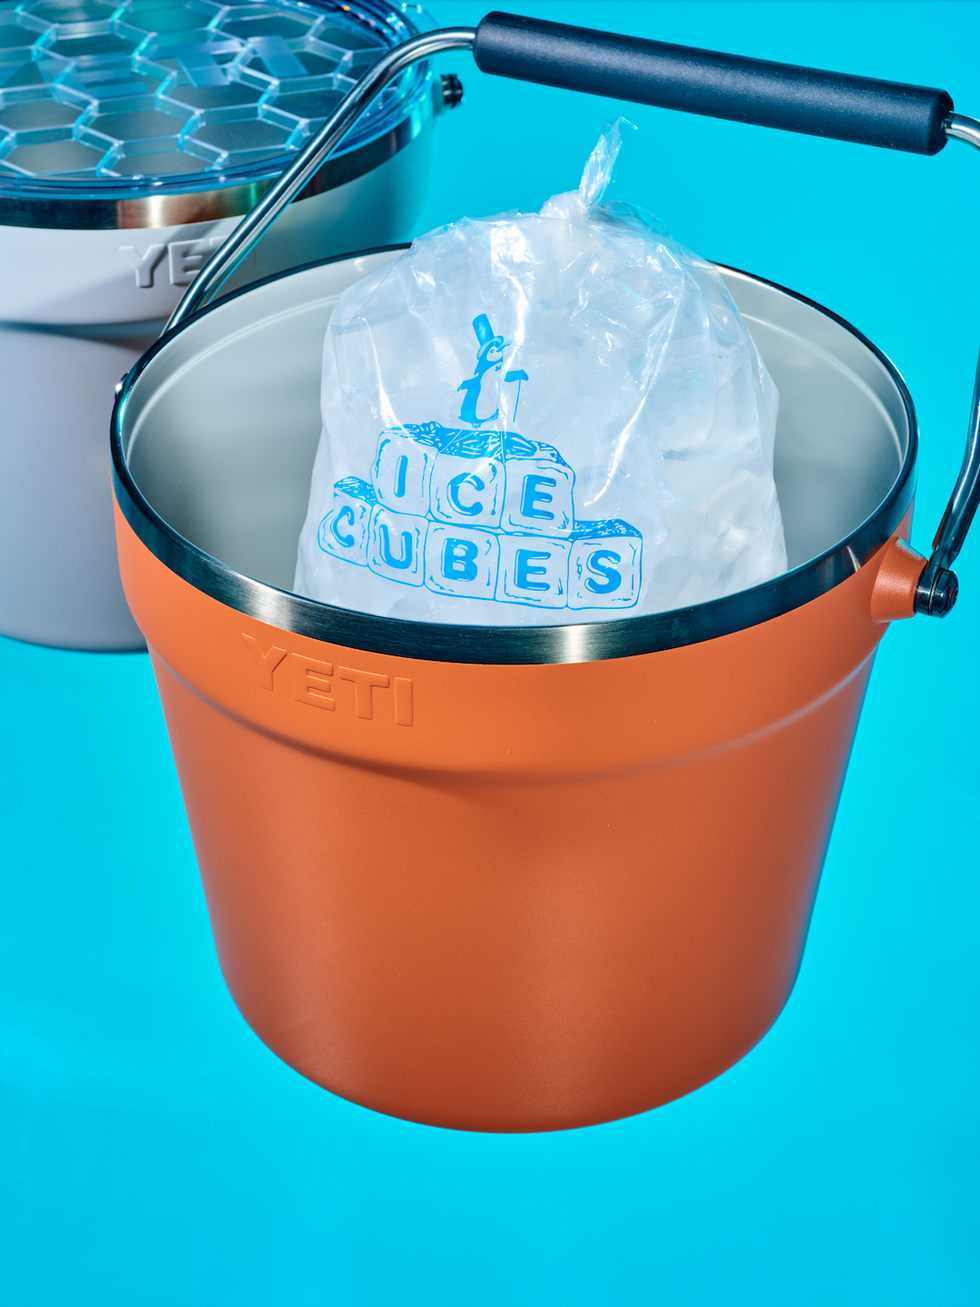 Yeti Rambler Beverage Bucket Review: The Best Ice Bucket for Summer